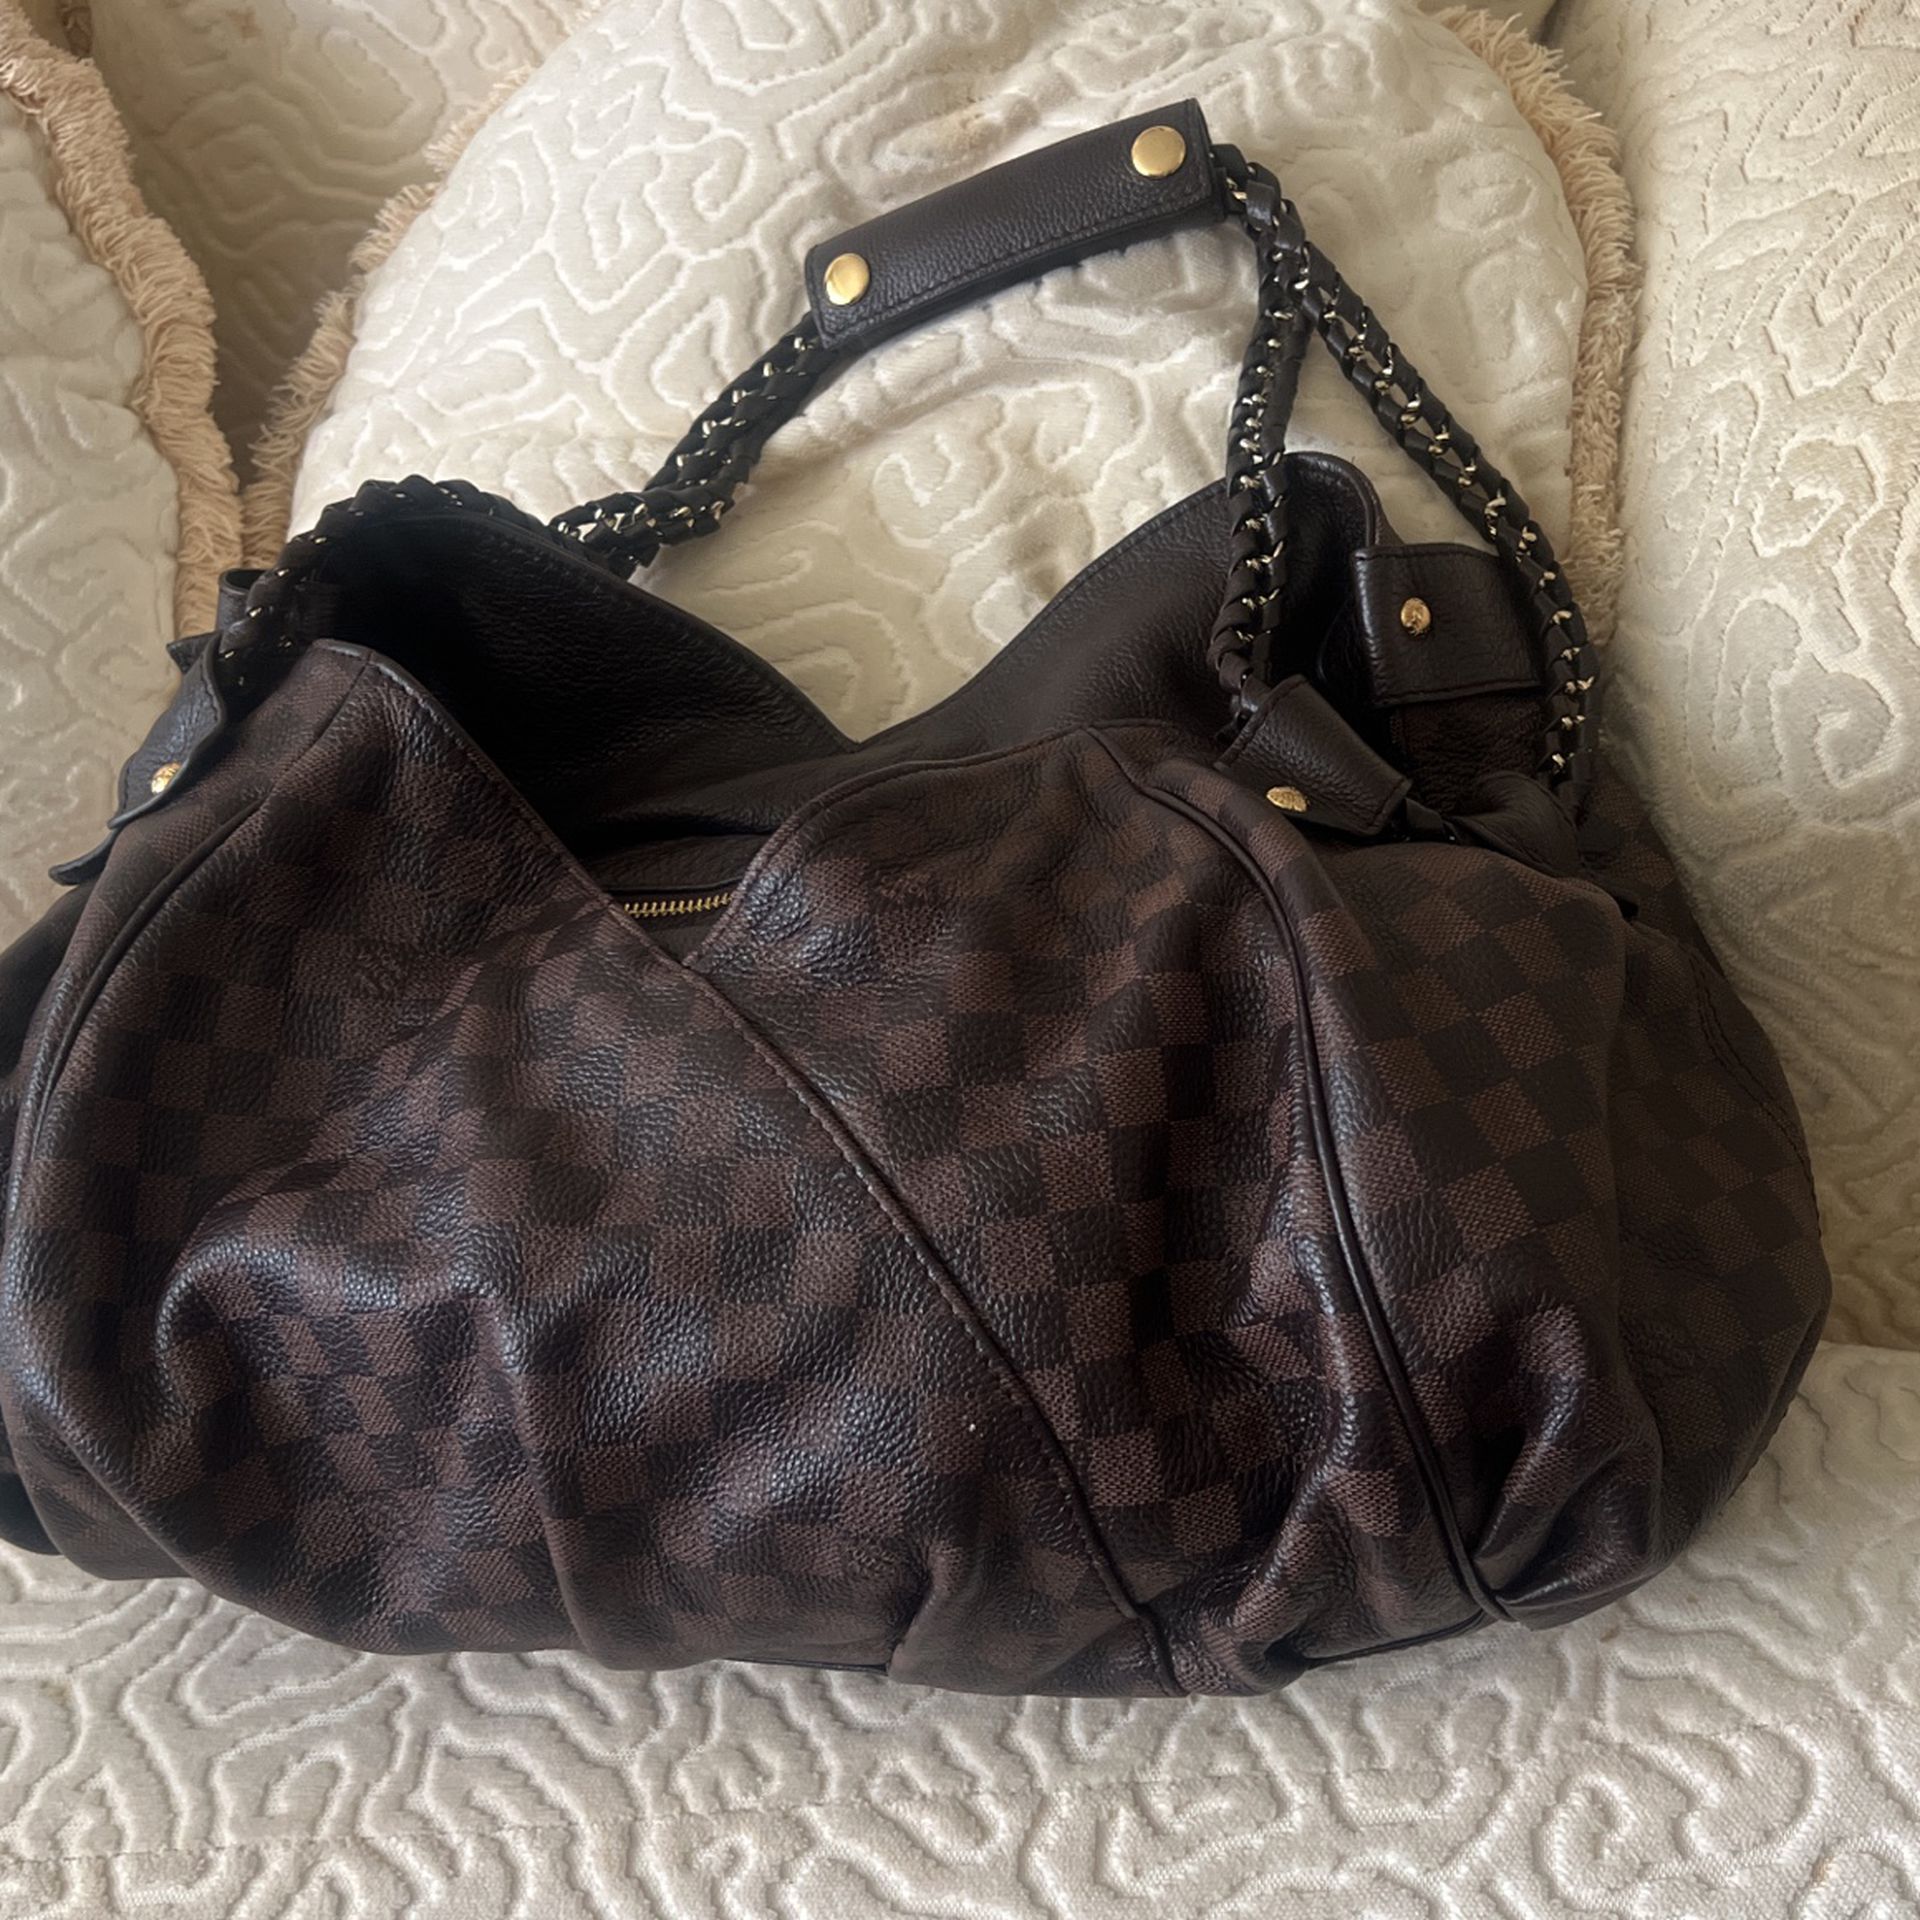 Authentic Louis Vuitton Shoulder Bag for Sale in Homestead, FL